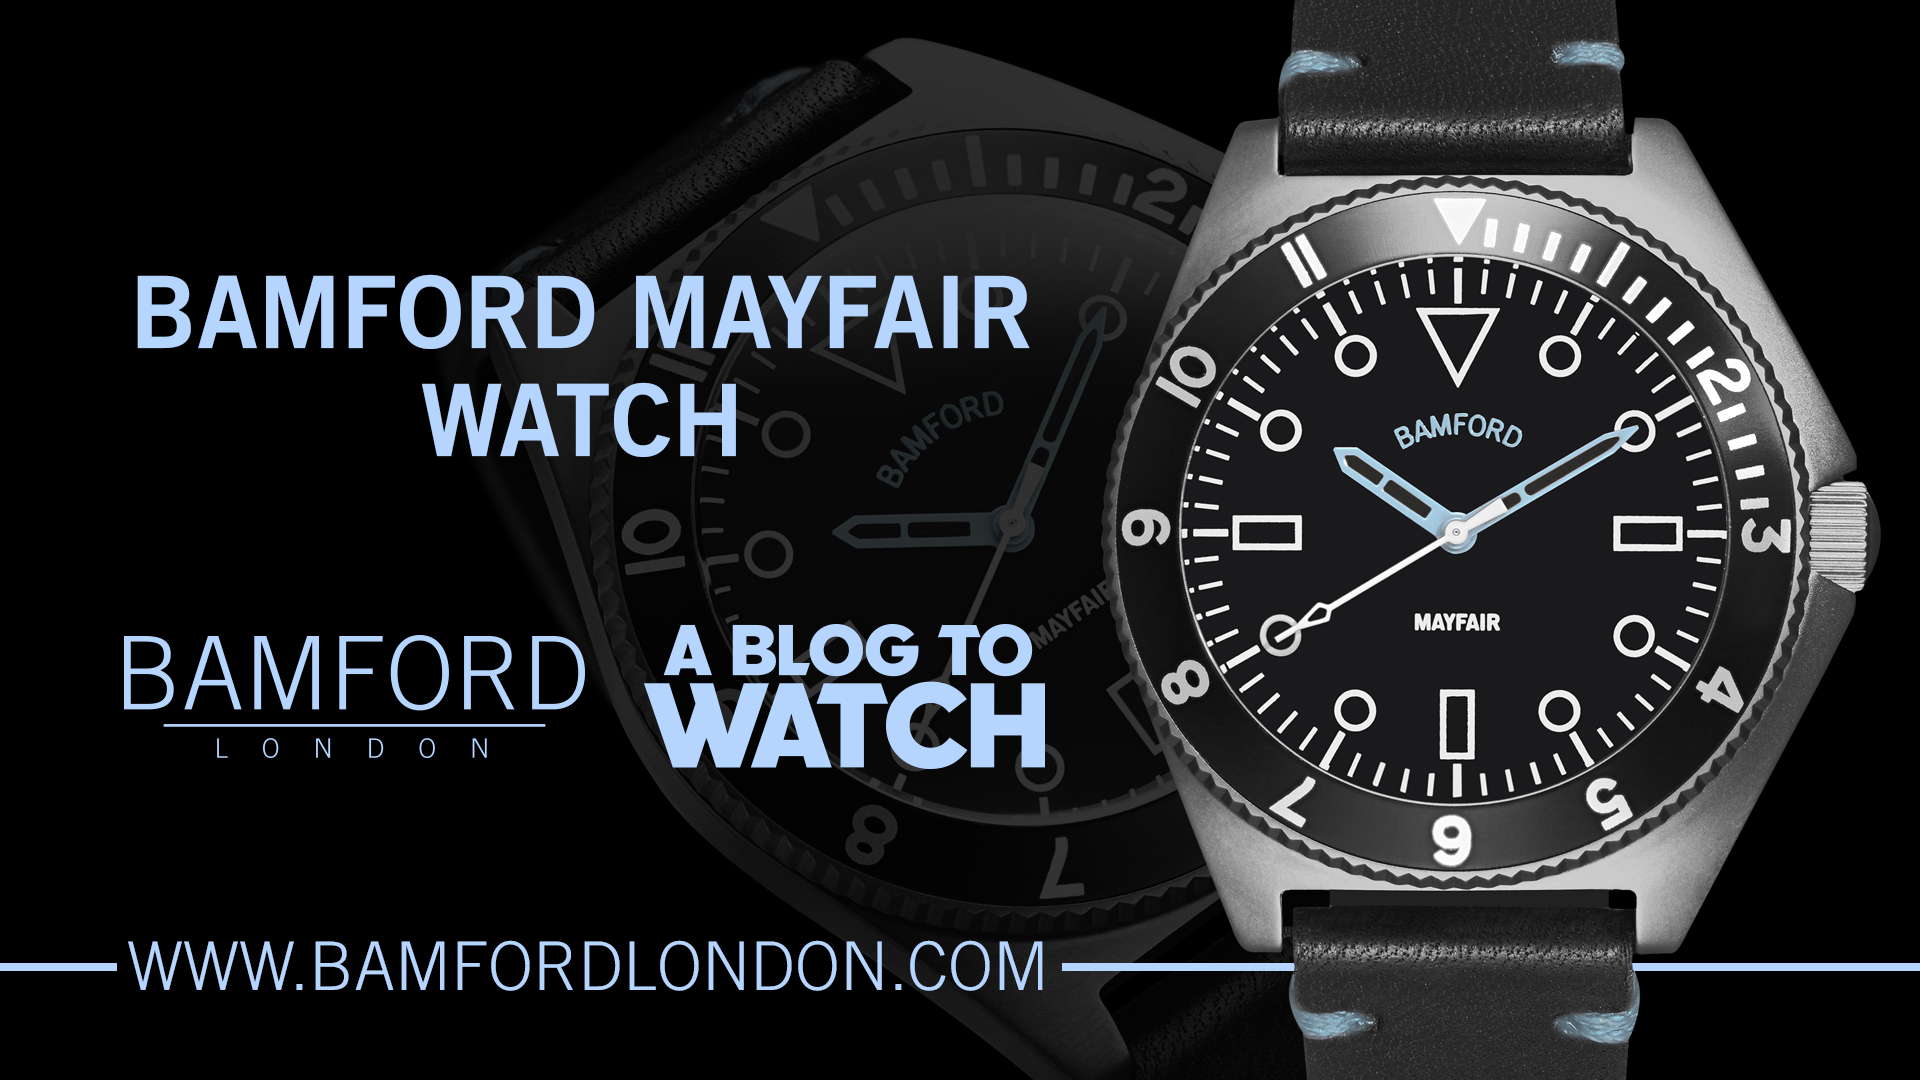 LAST CHANCE: Bamford Mayfair Watch Giveaway